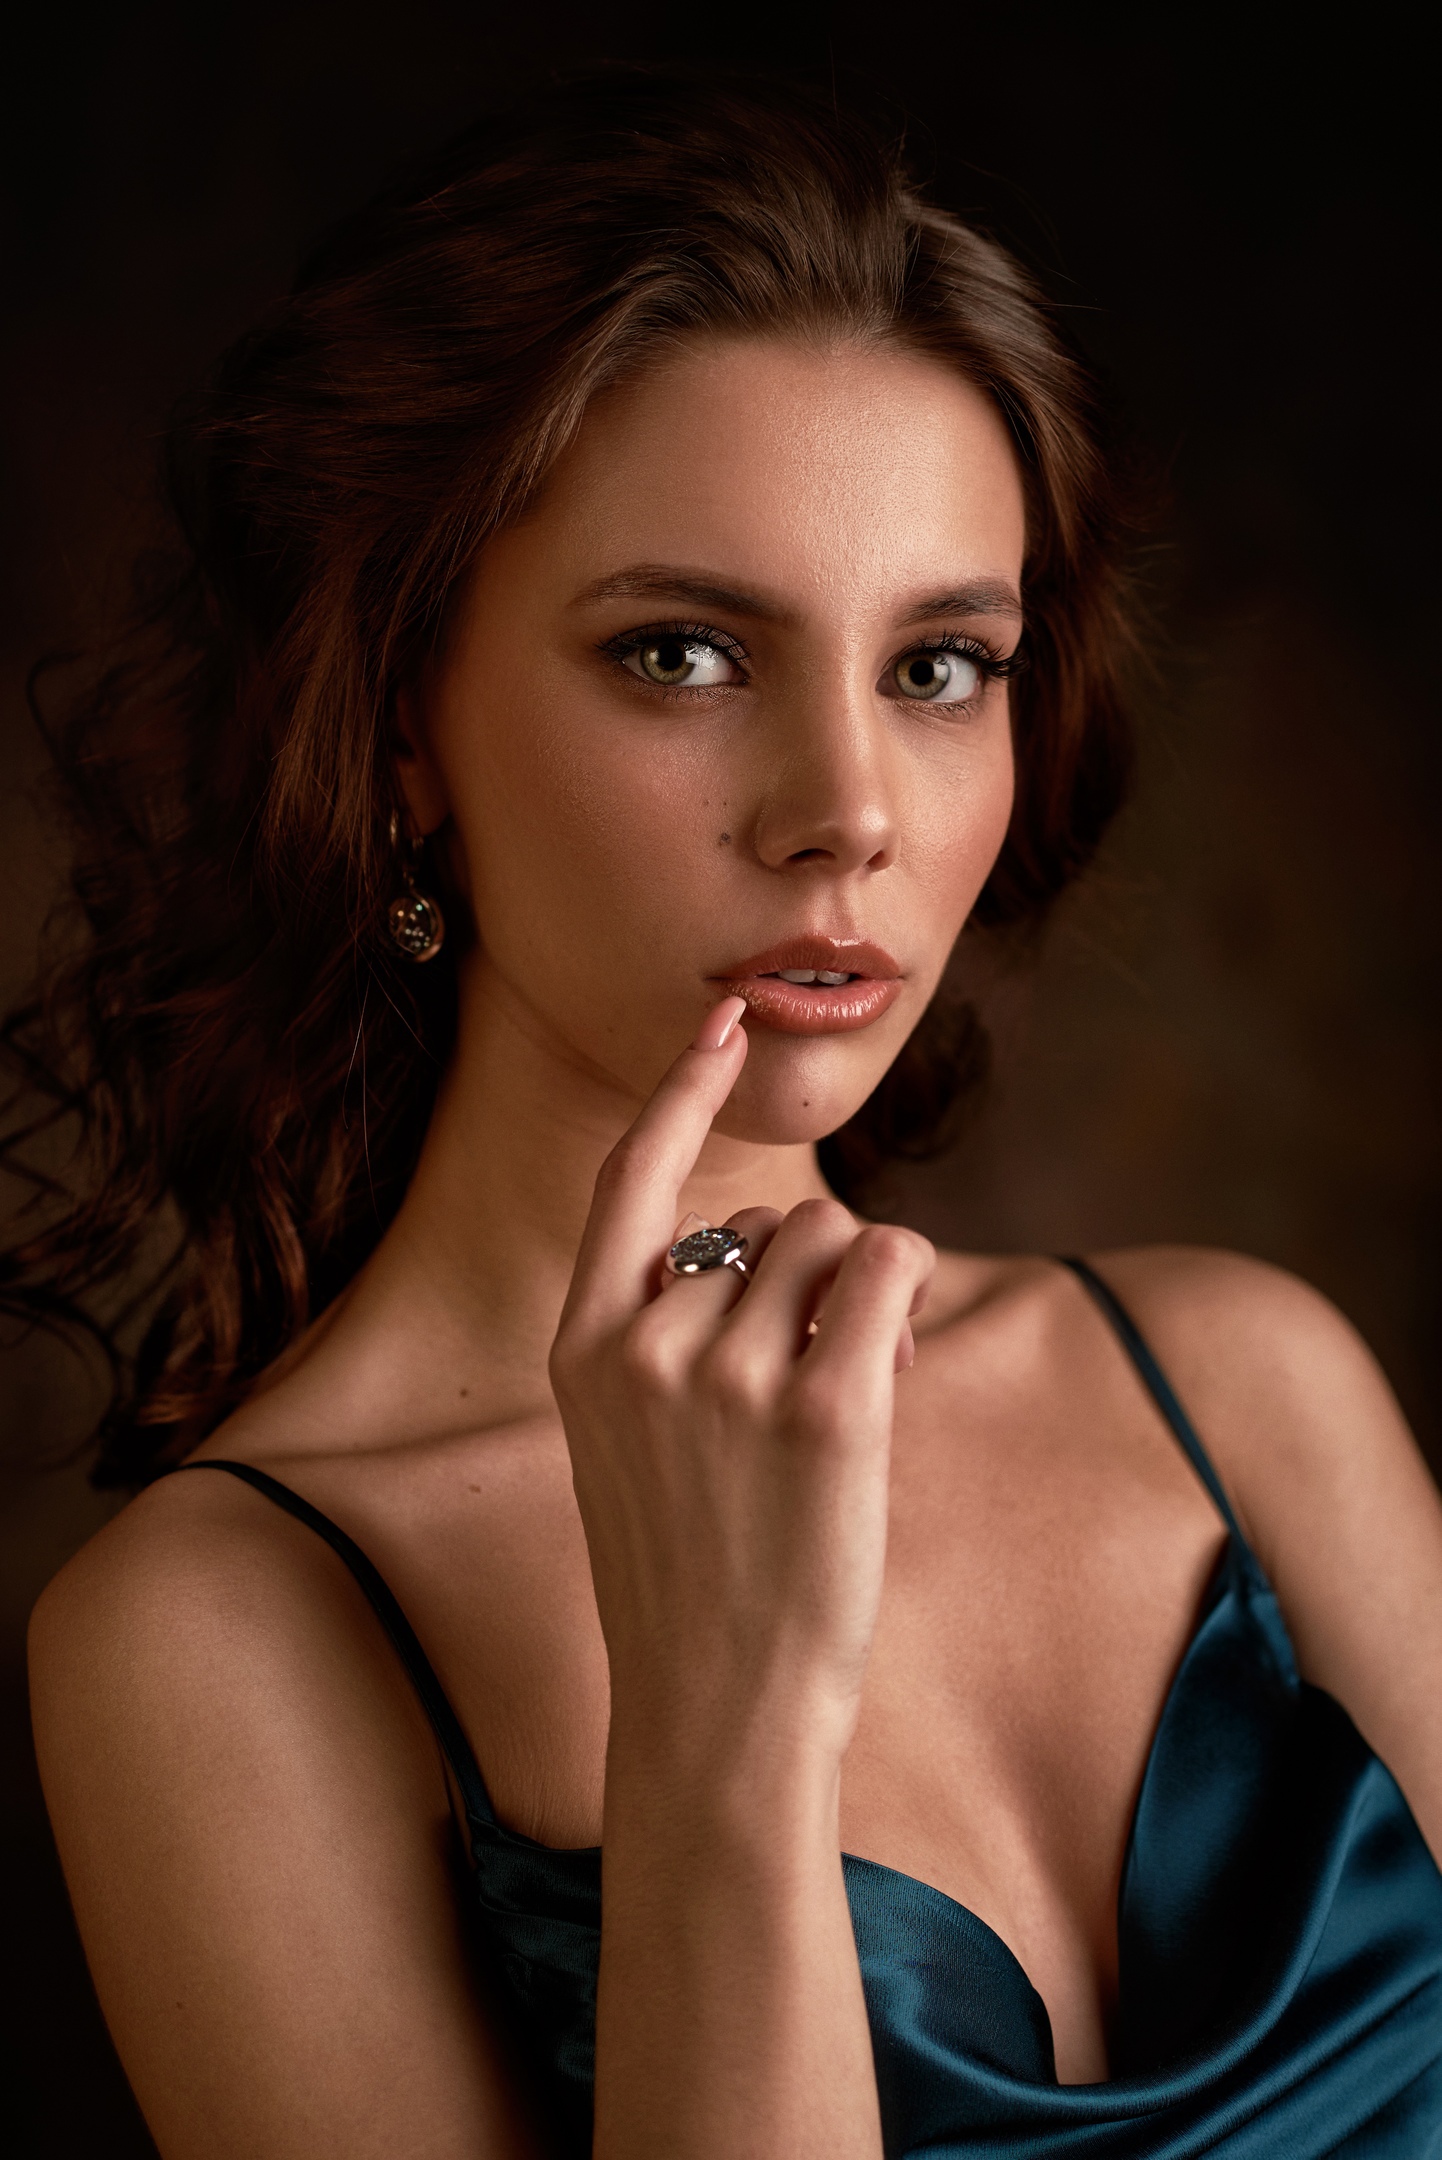 Max Pyzhik Women Maria Rykova Brunette Looking At Viewer Makeup Dress Jewelry Blue Clothing Portrait 1442x2160